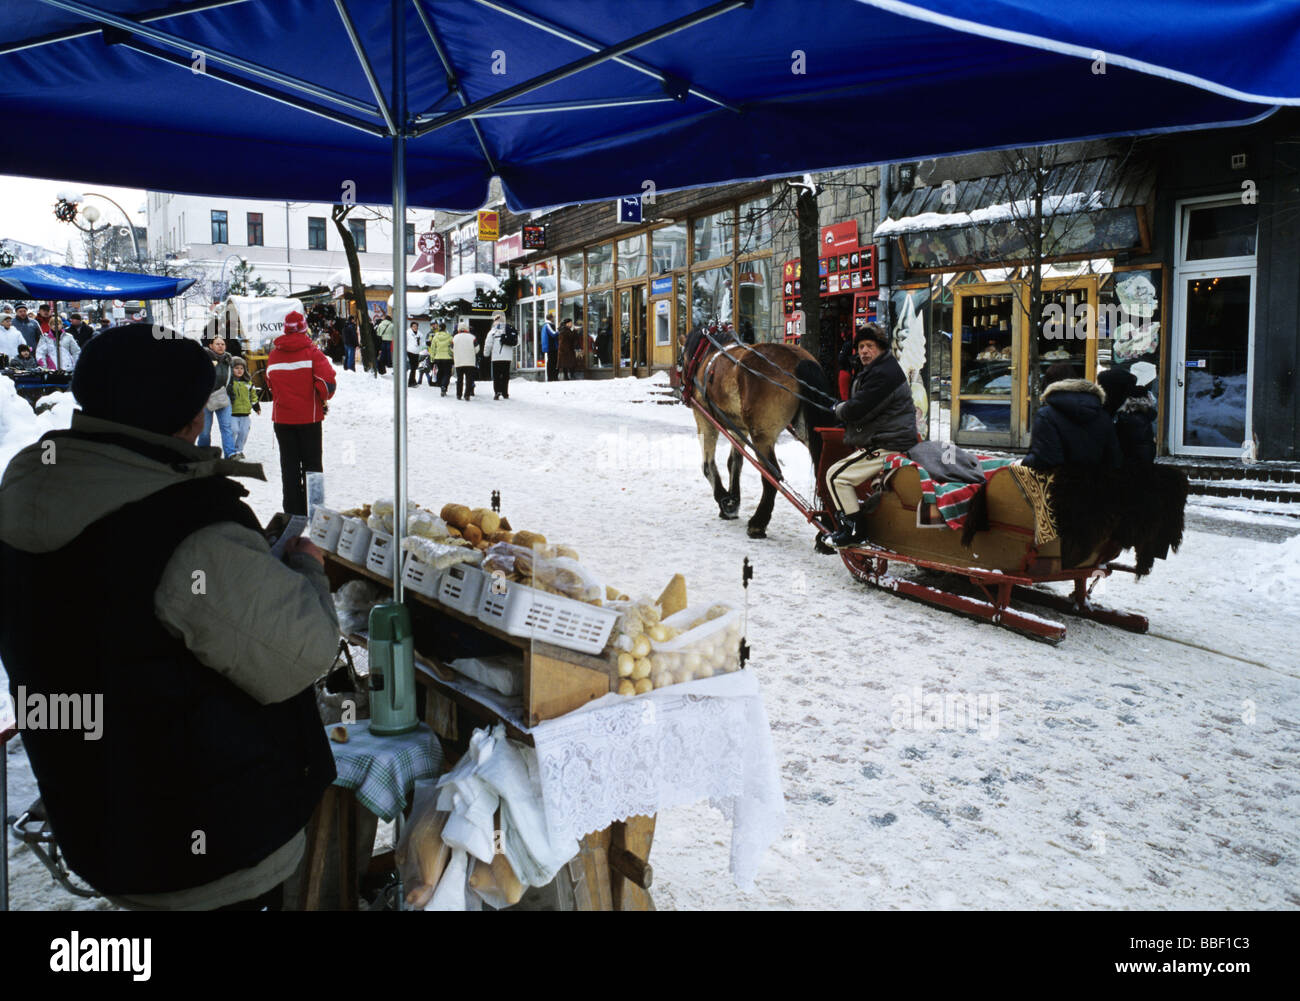 Polonia Zakopane Krupowki Oscypki stand ferial con queso y trineo de caballos Foto de stock